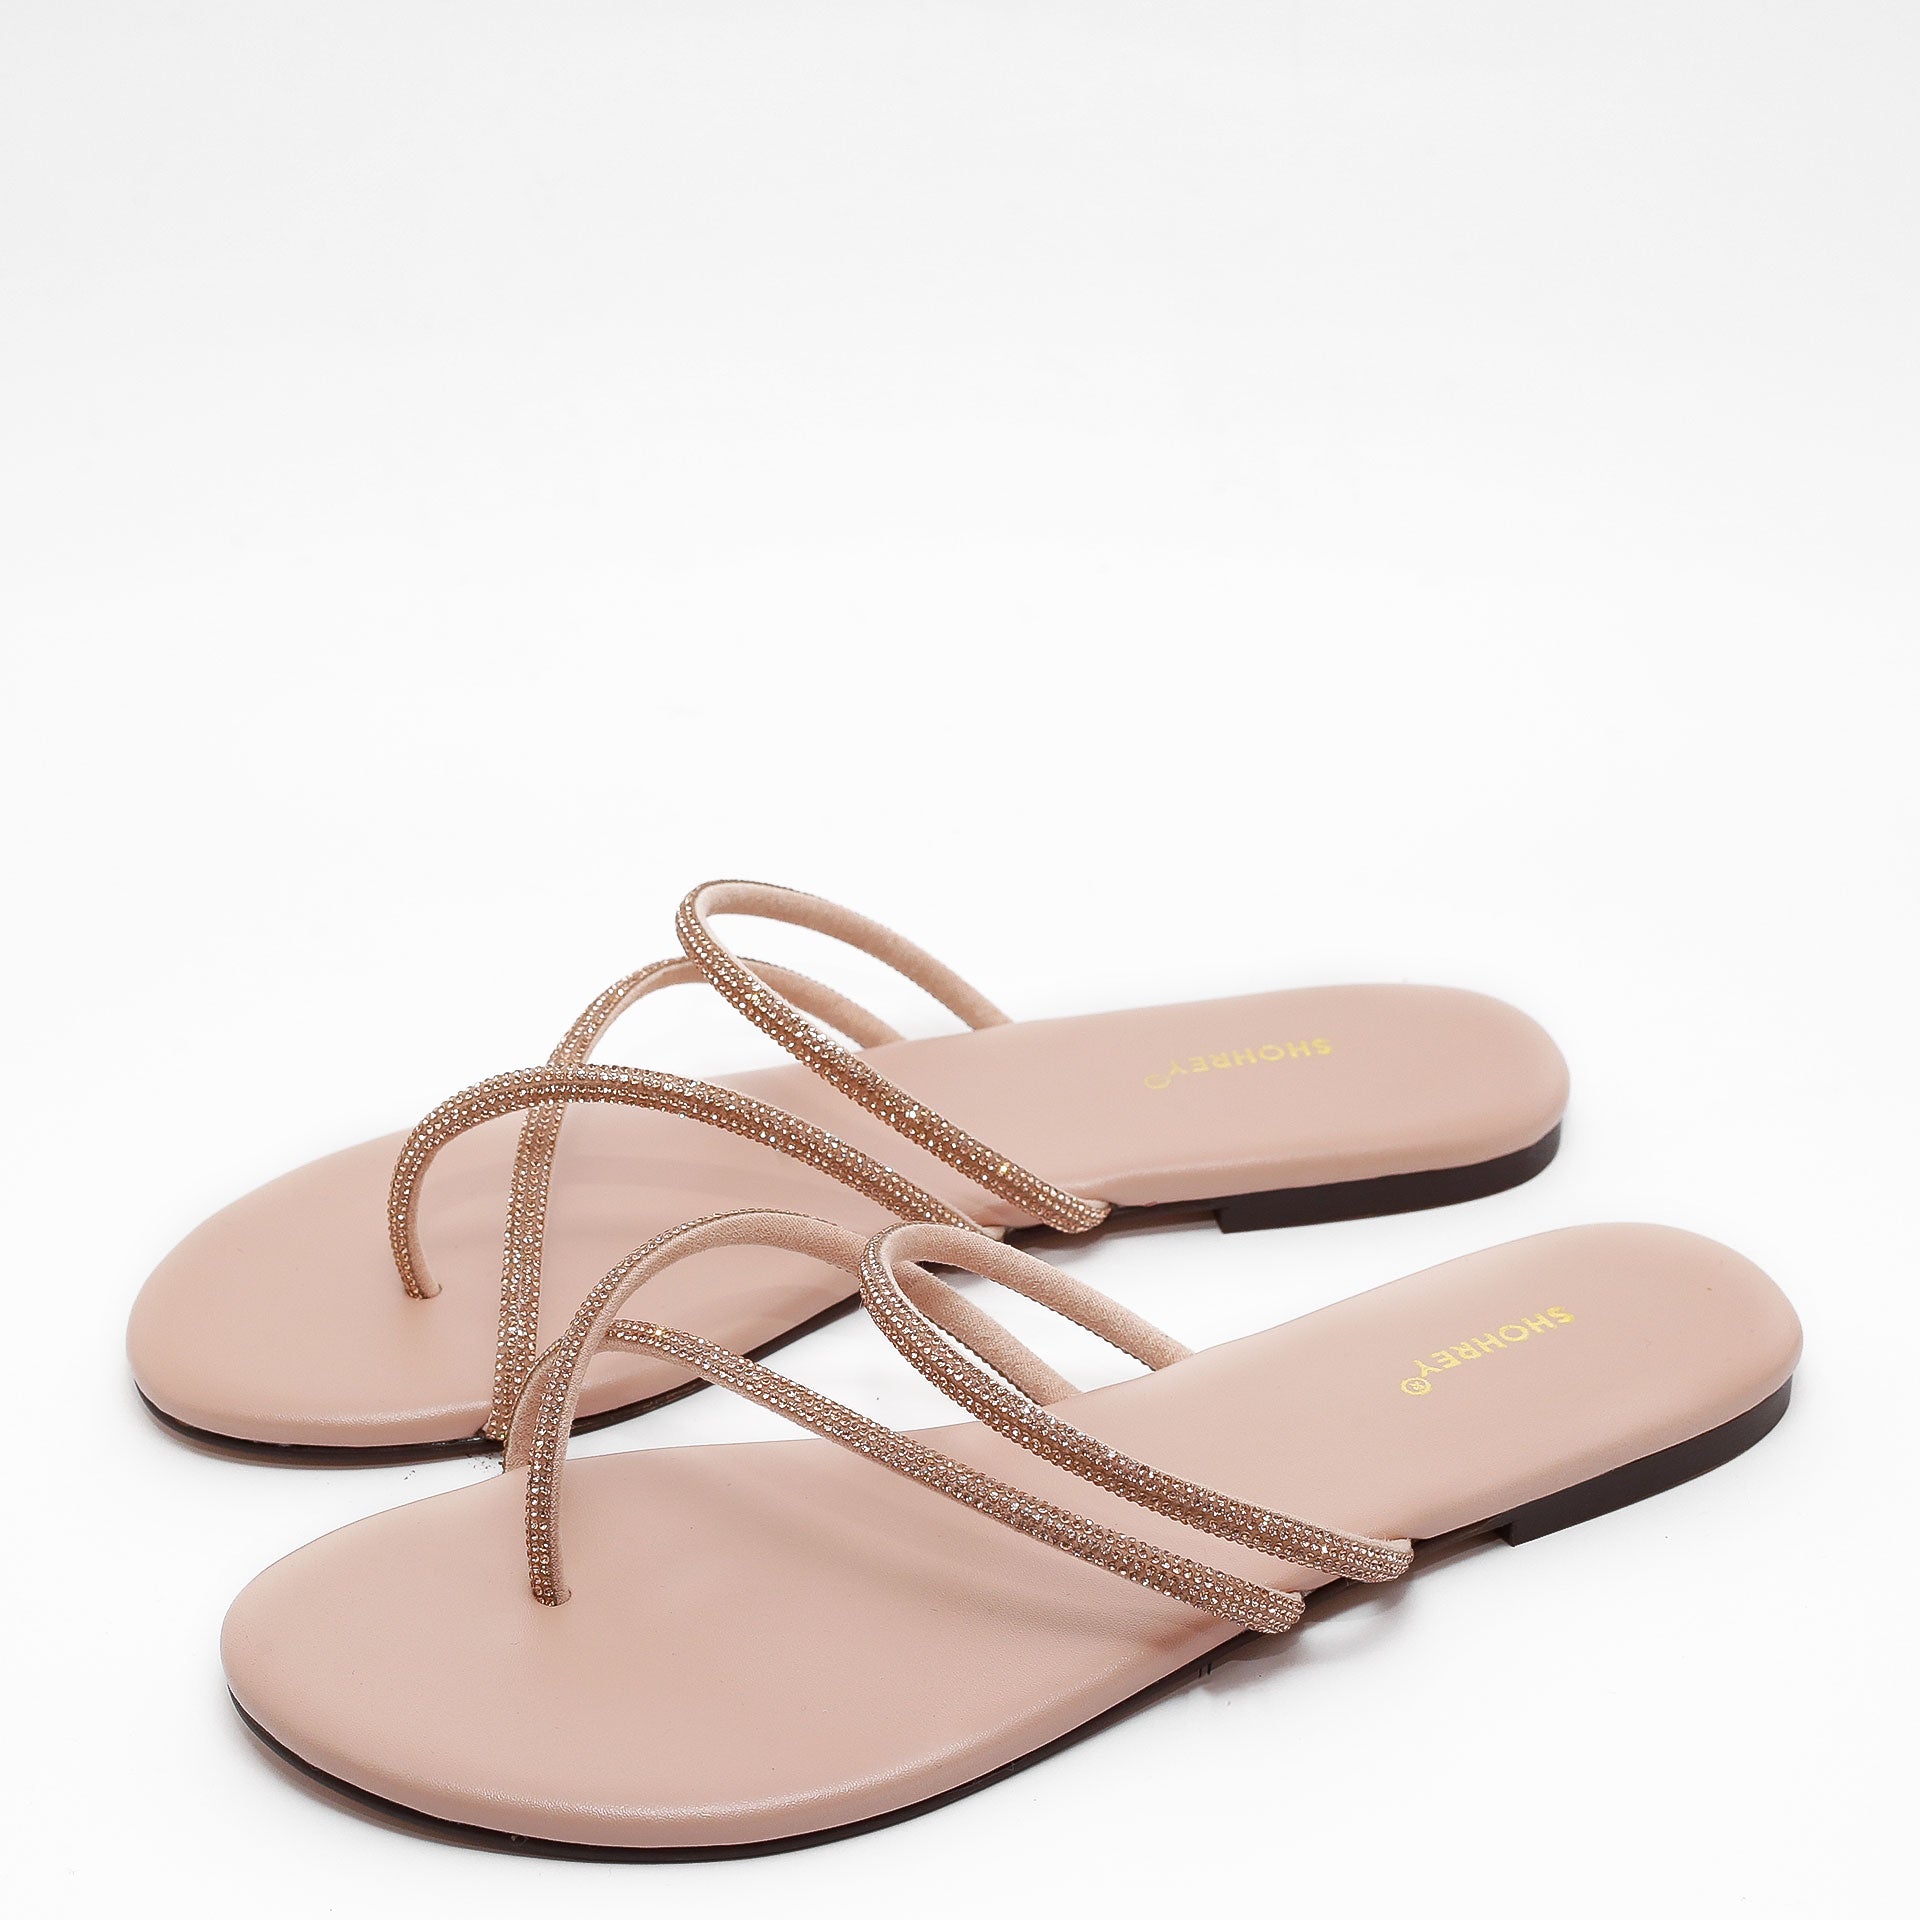 Aneesa Collections 142 Flats sandals for women Flat sandal for women